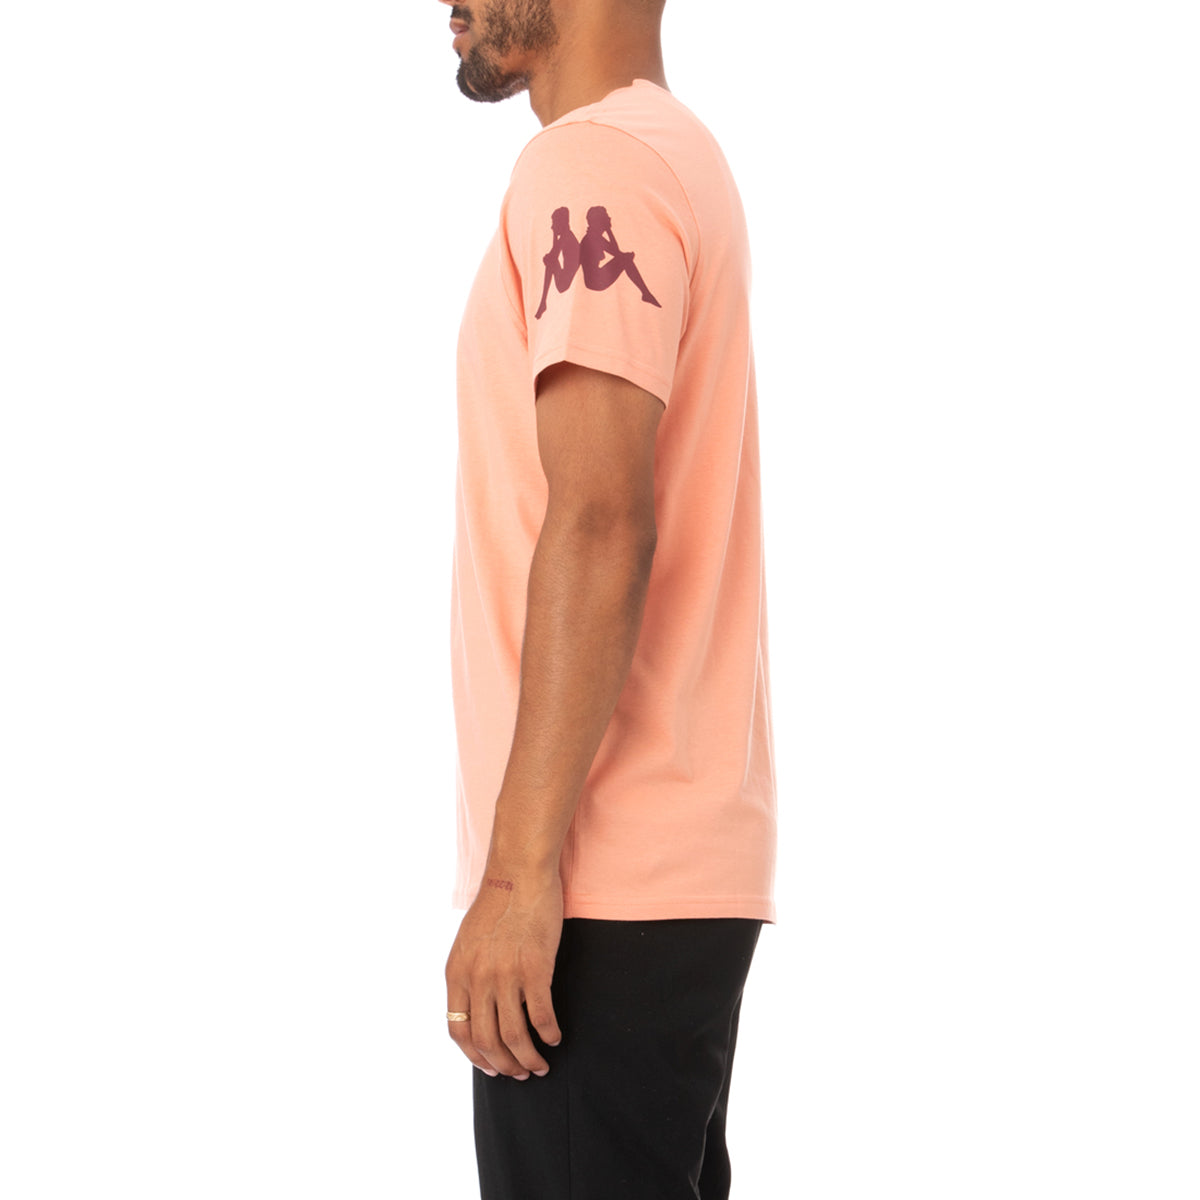 Camiseta Paroo rosa hombre - imagen 2